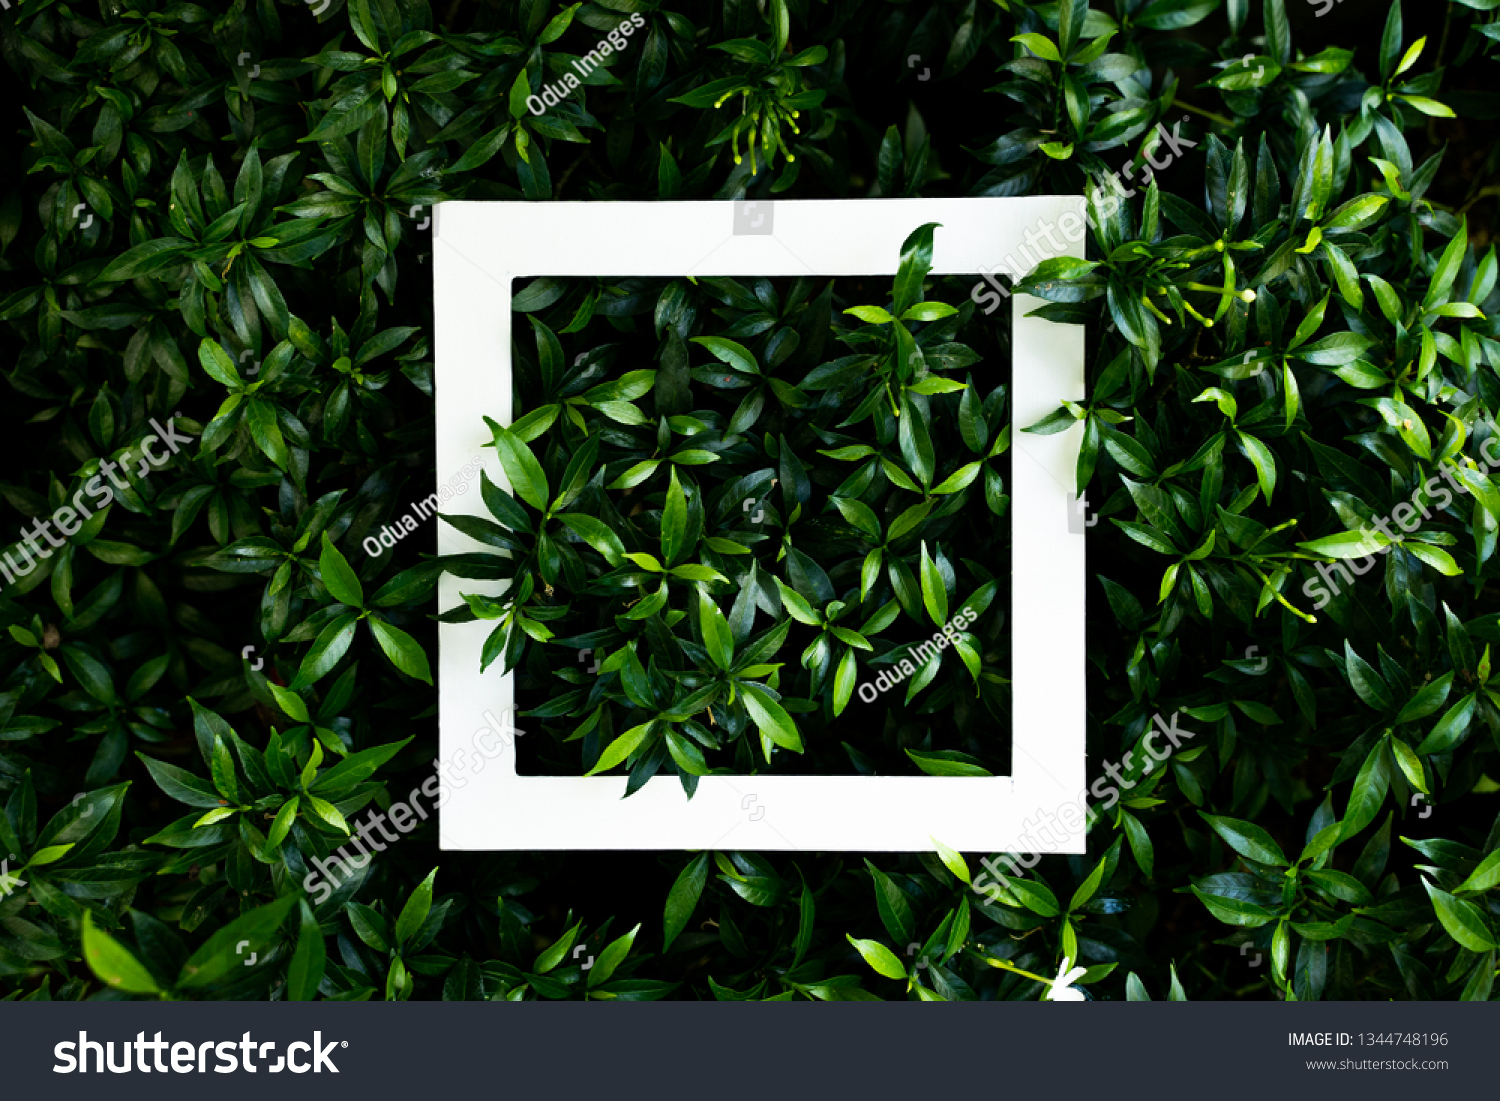 tropical leaf texture design, foliage nature dark green background - Image #1344748196